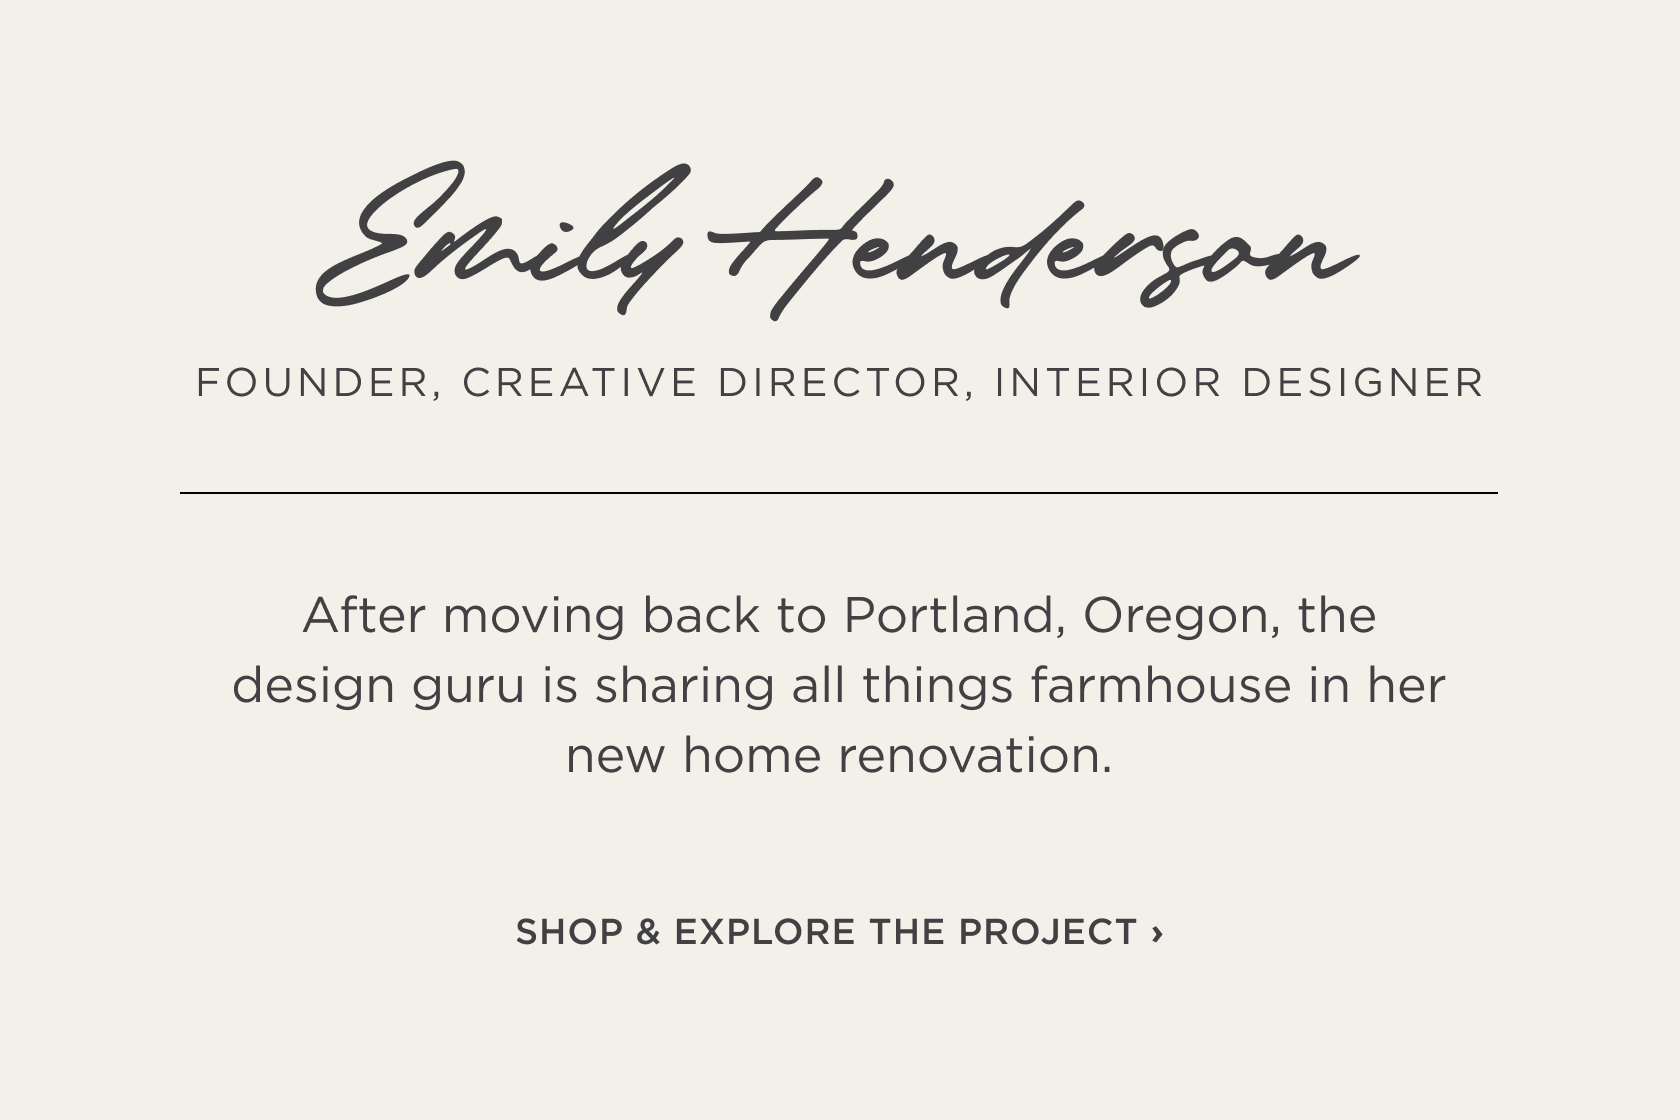 Shop Emily Henderson's project